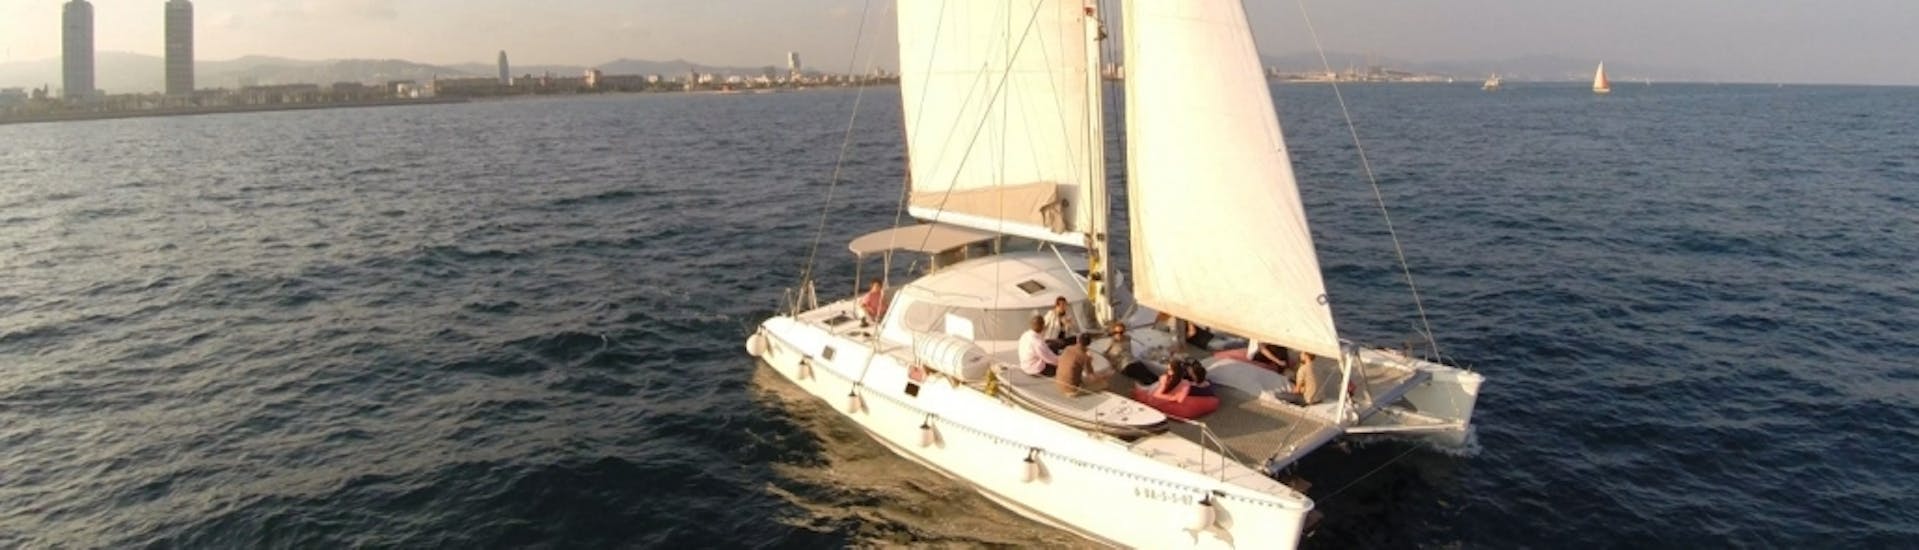 Giro in barca a vela a Barcellona al tramonto con aperitivo.